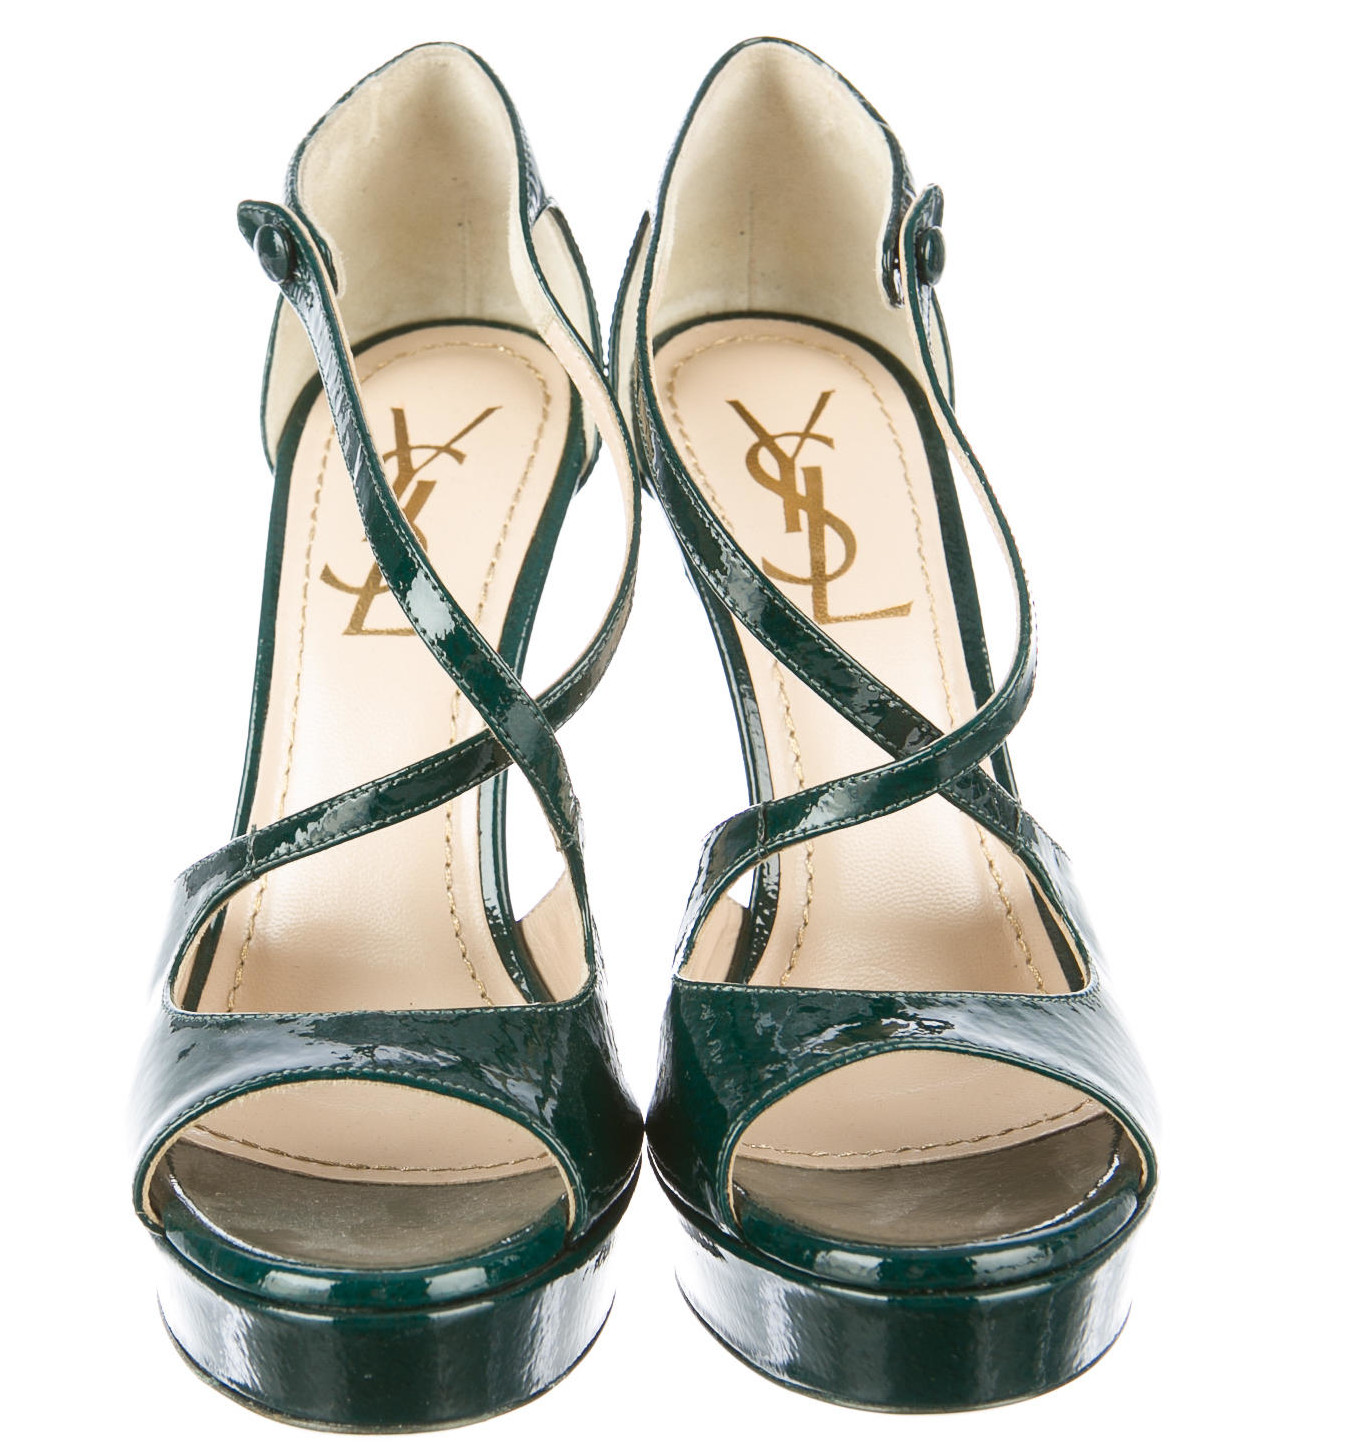 Teal green Yves Saint Laurent patent leather platform sandals